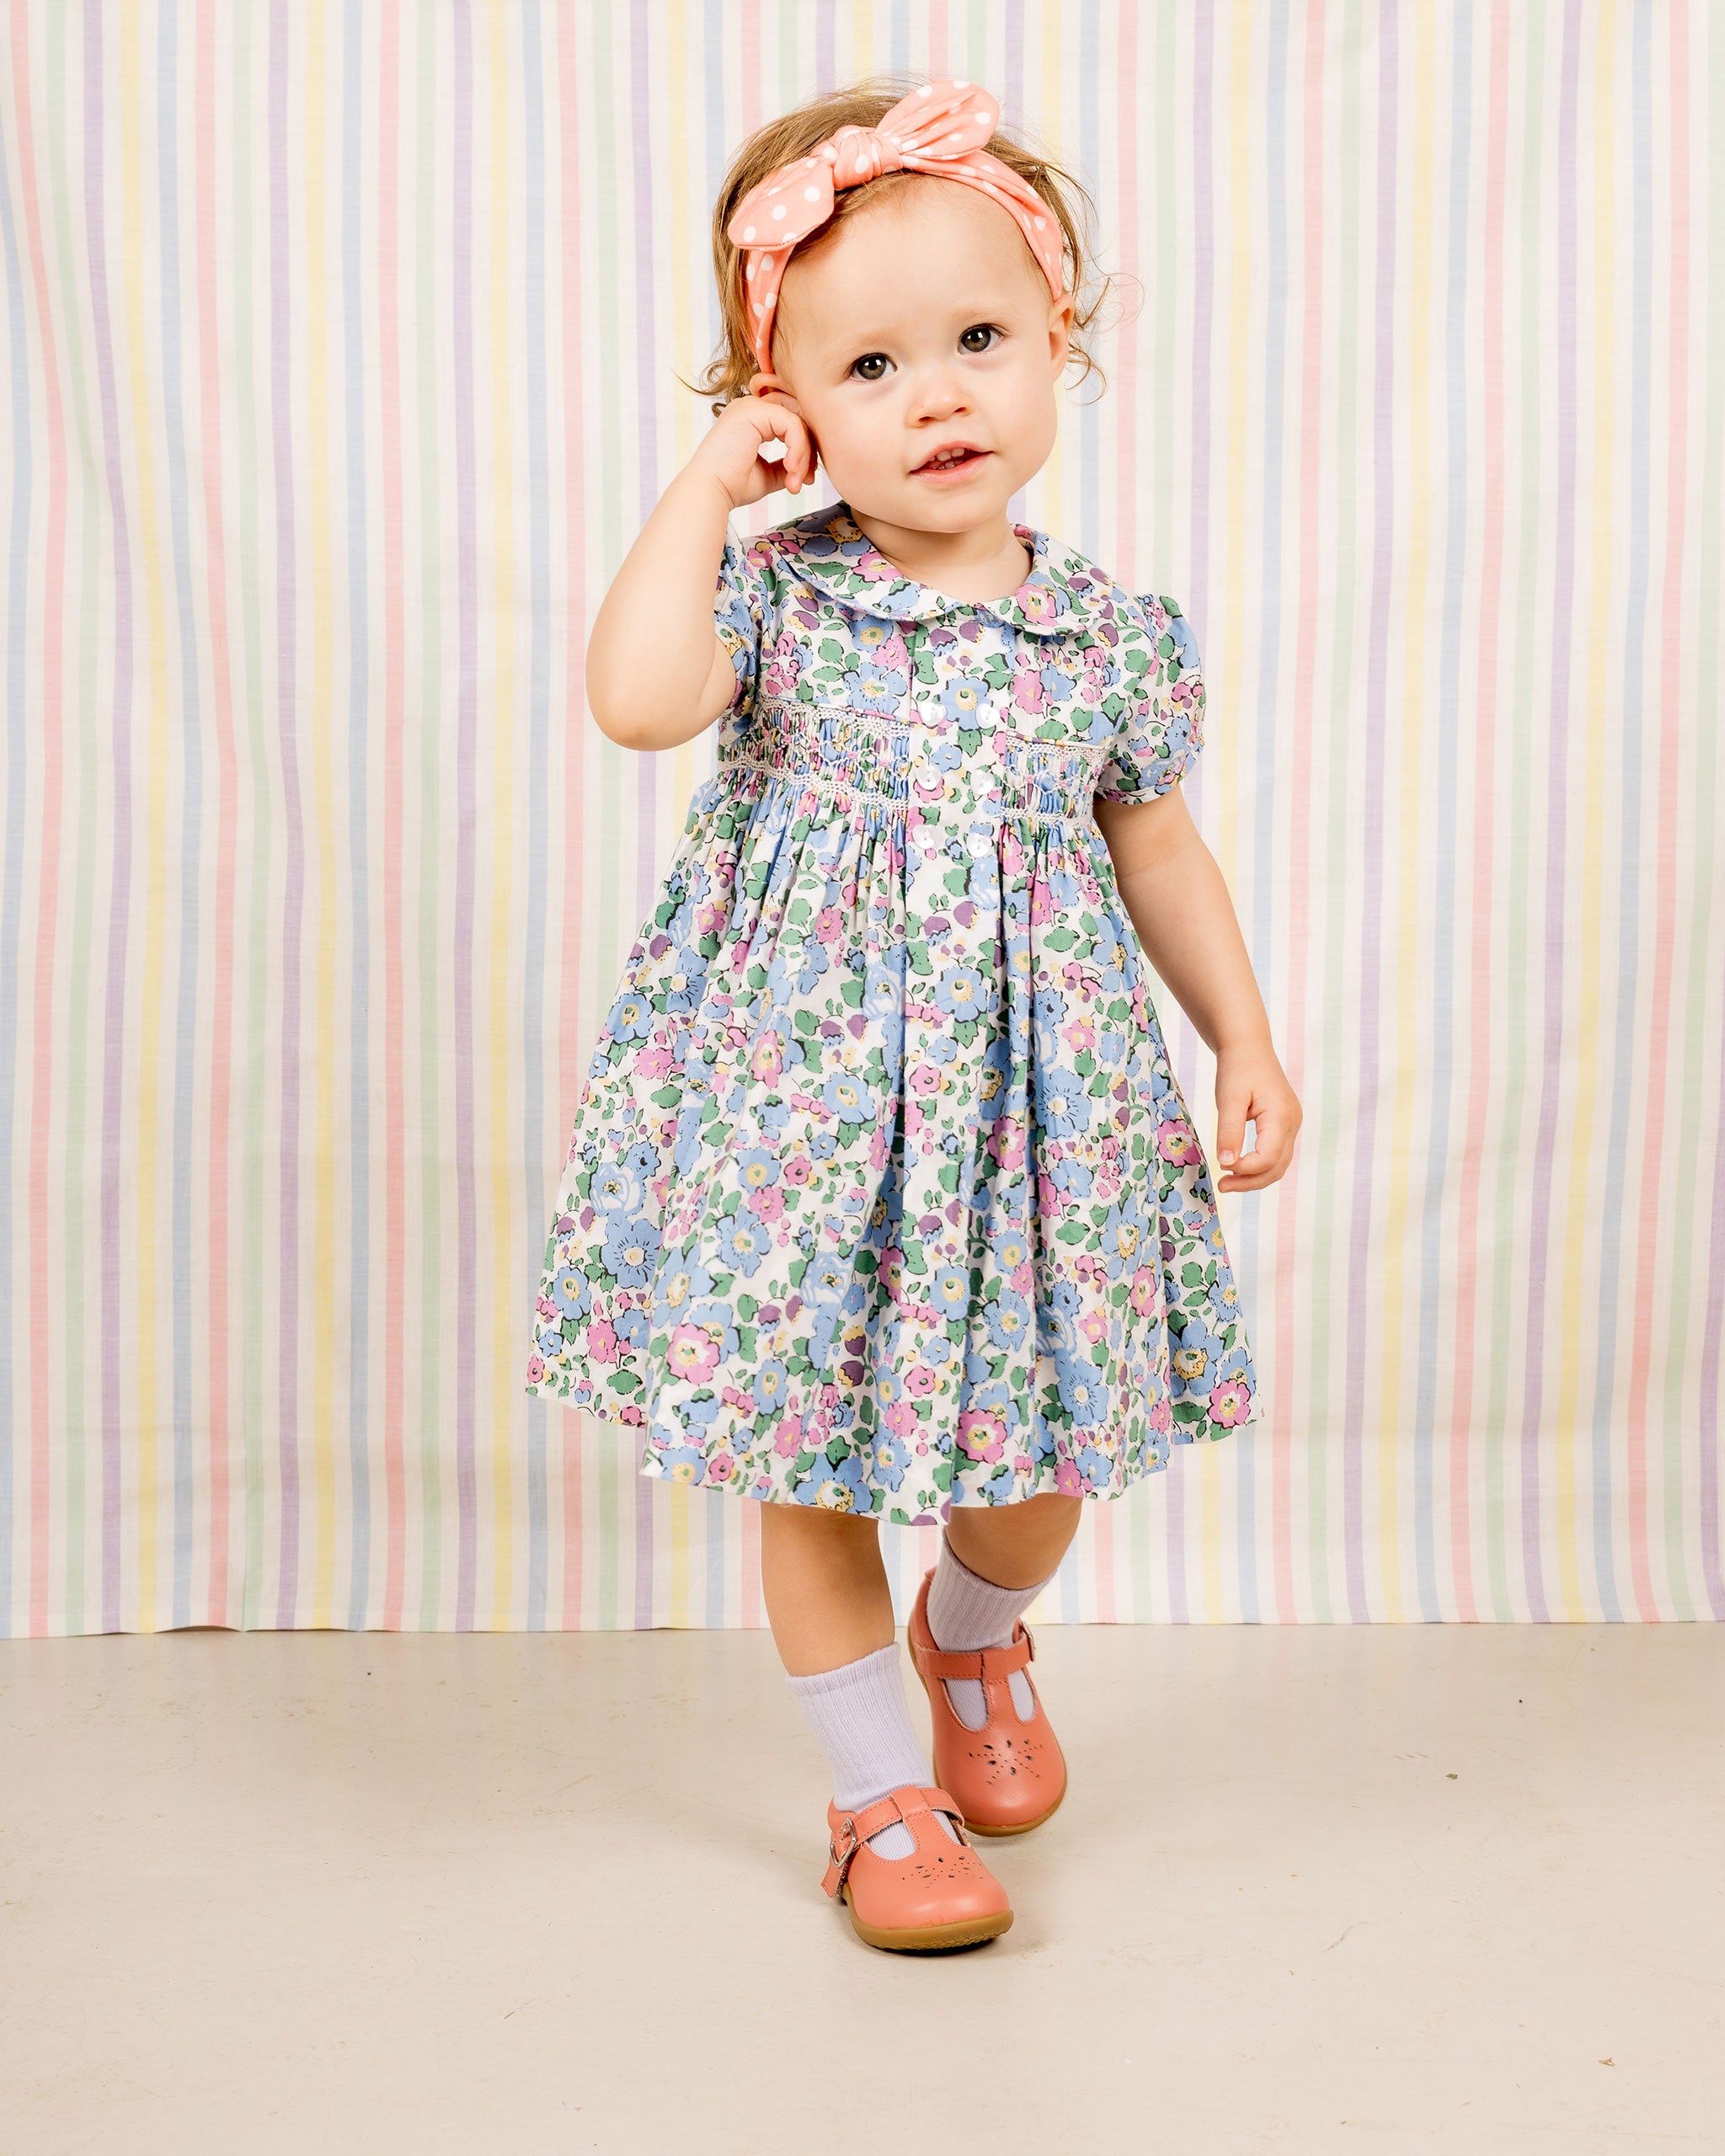 cute toddler in adorable floral smockdress, 